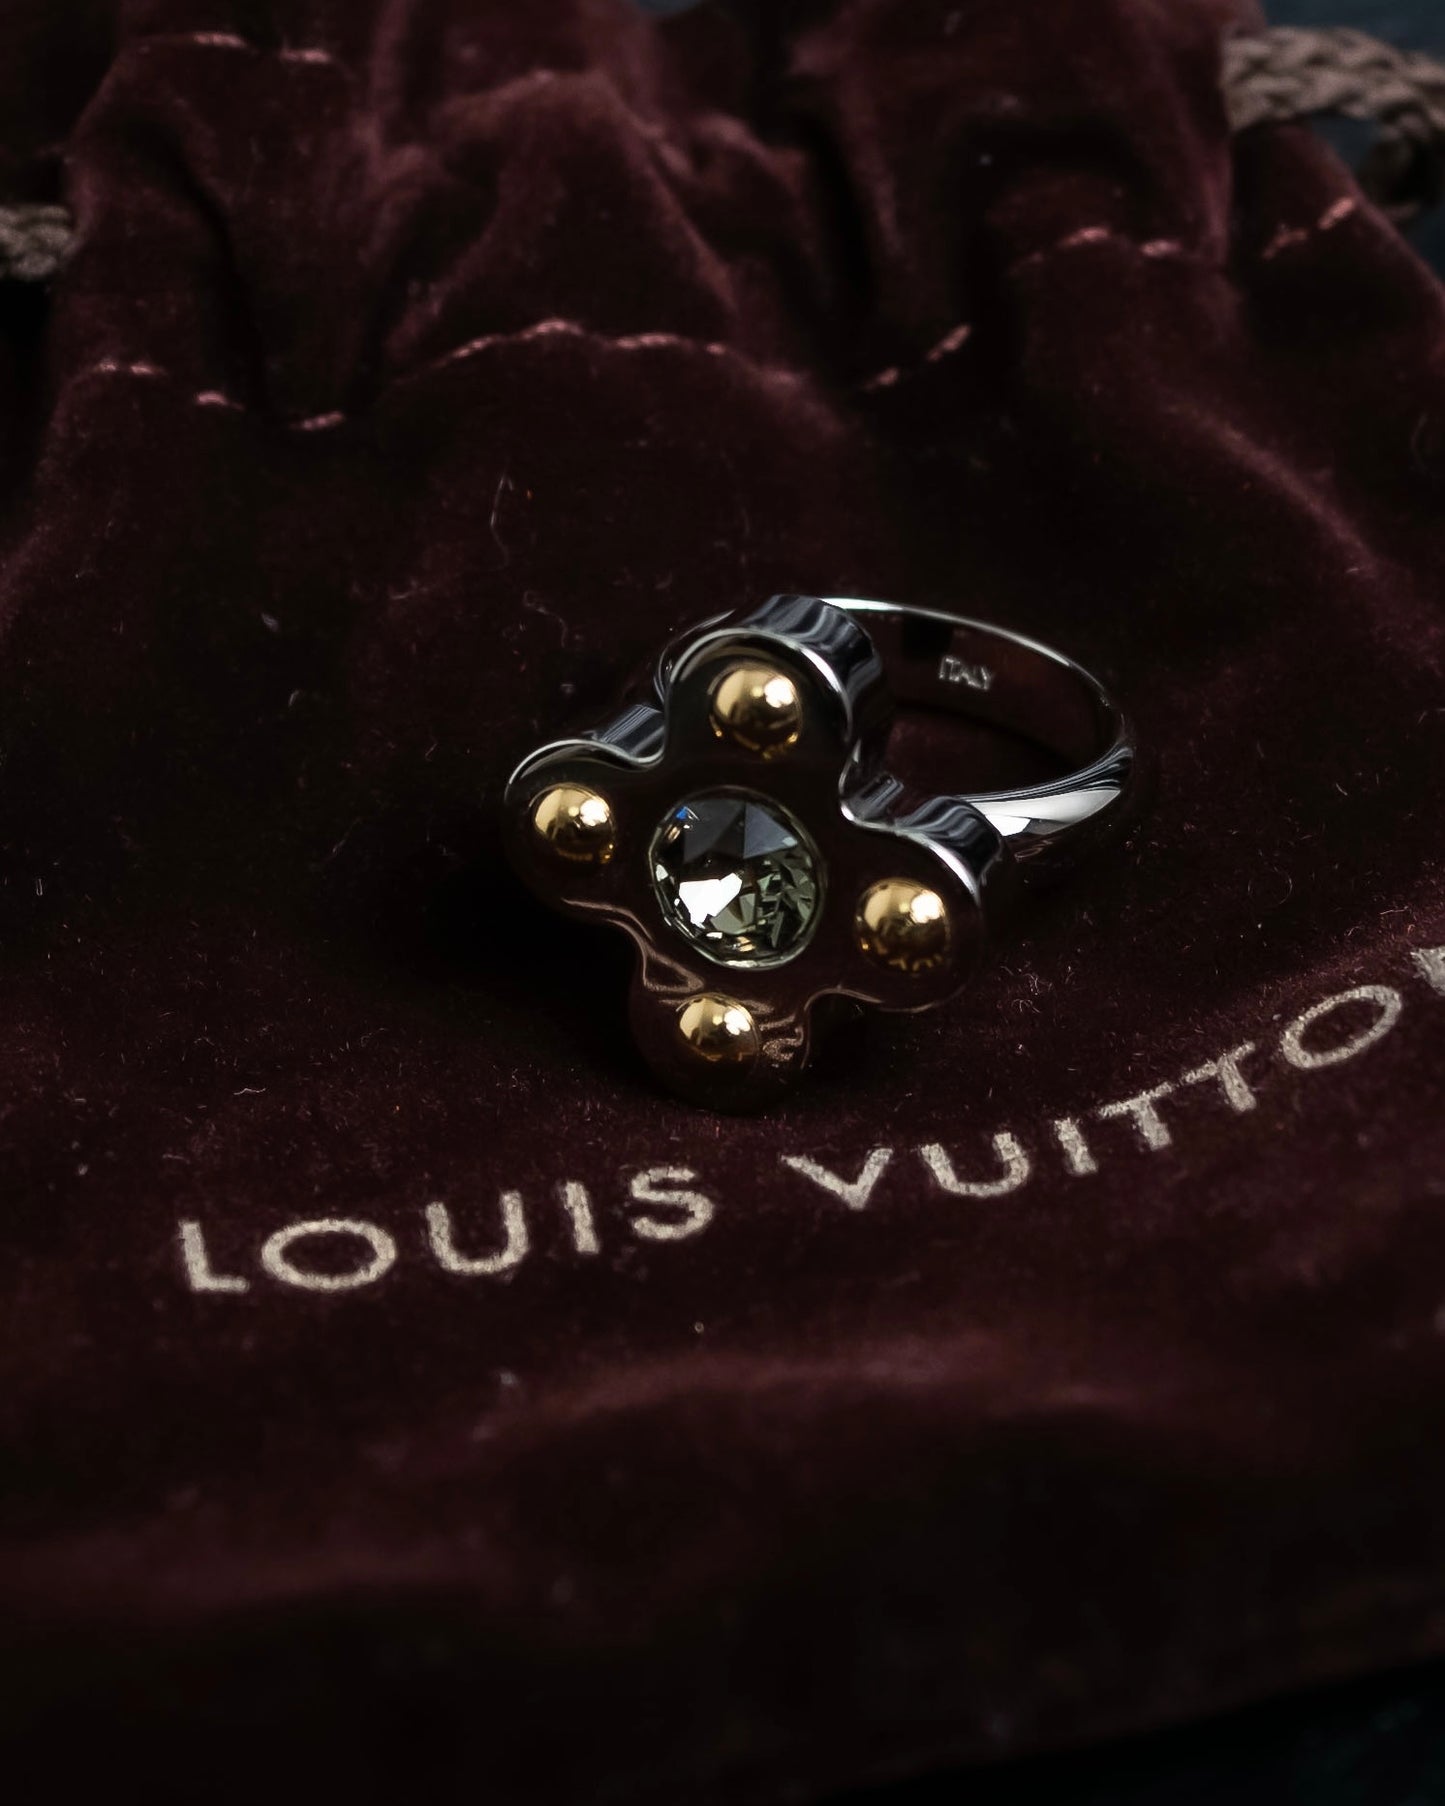 "LOUIS VUITTON" Berg love letters metal ring